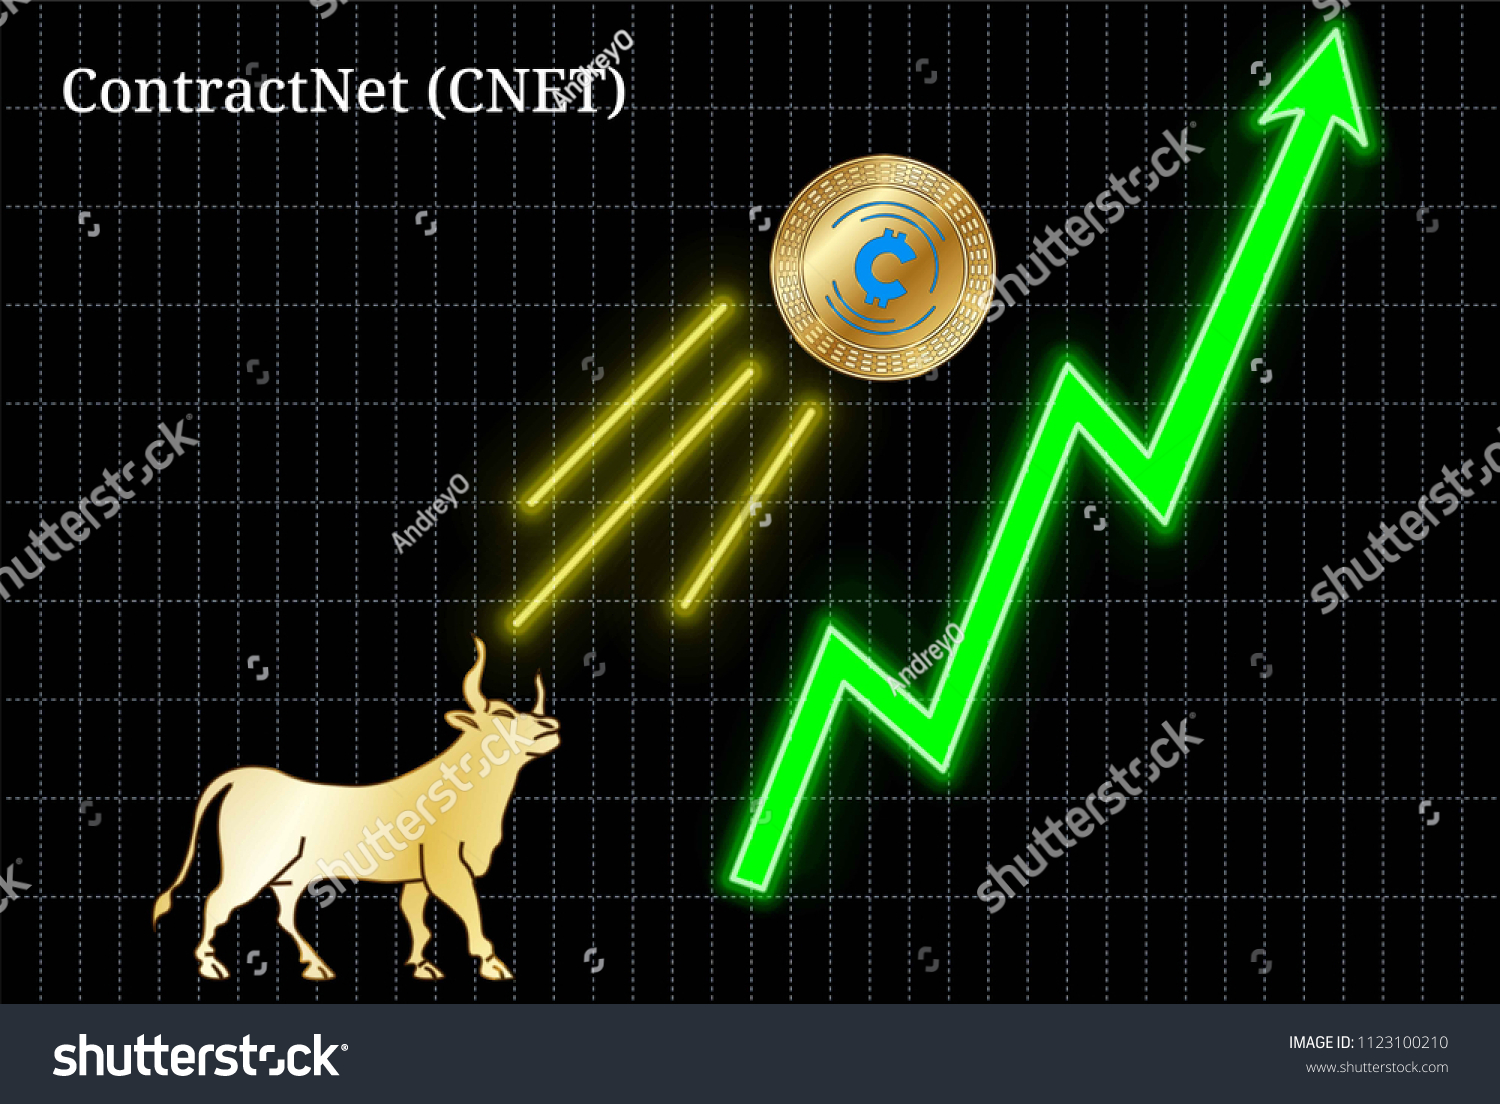 Cnet Stock Chart